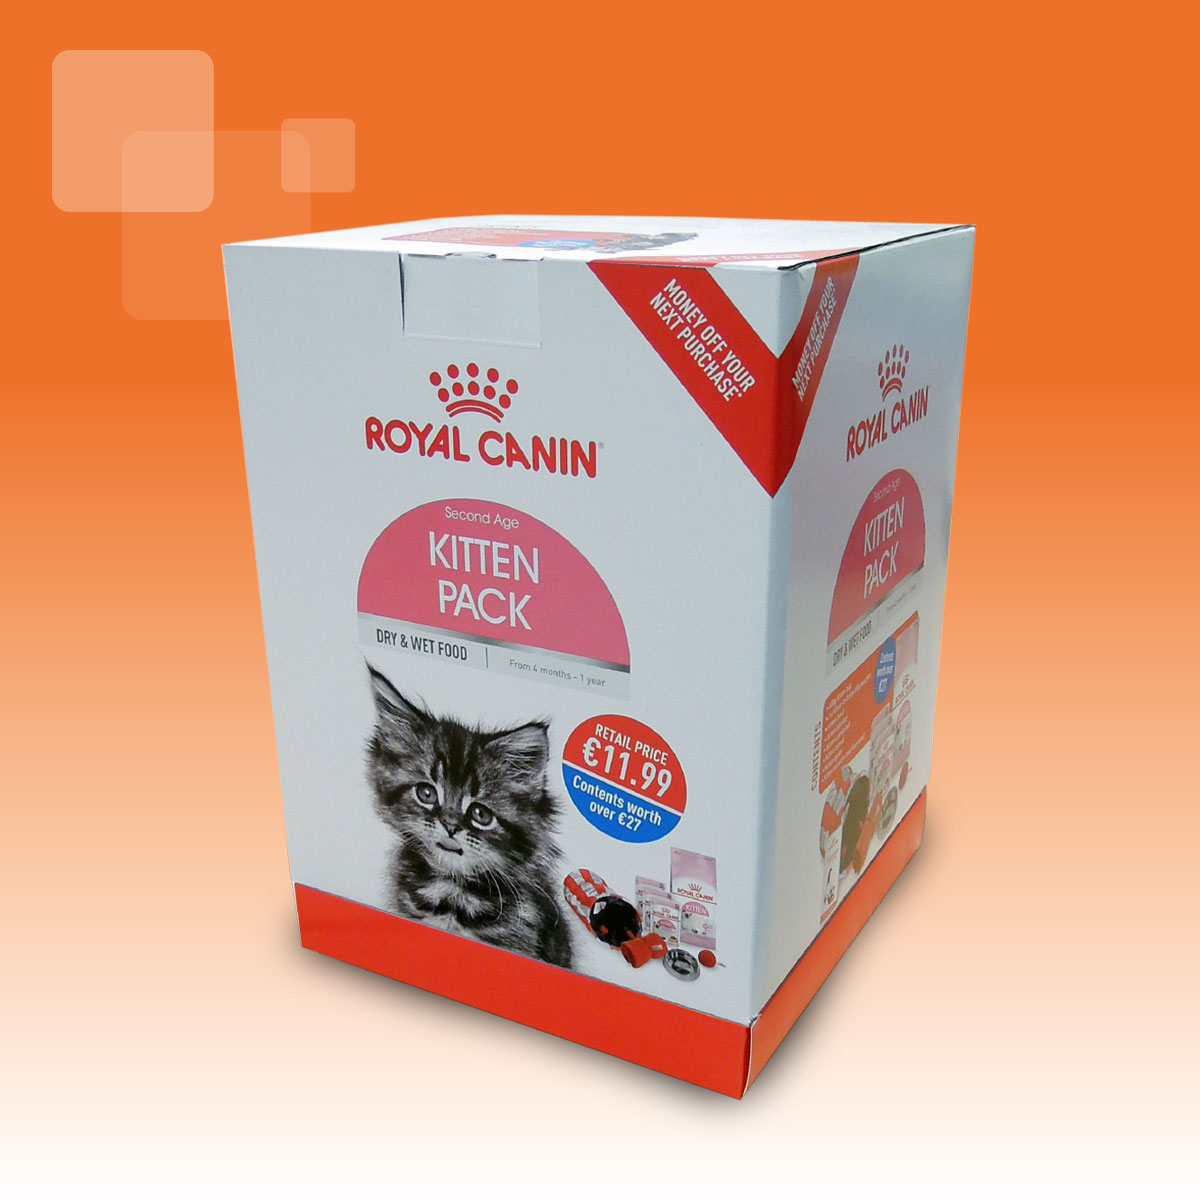 n smith cardboard packaging oldbury printed branded case study royal canin